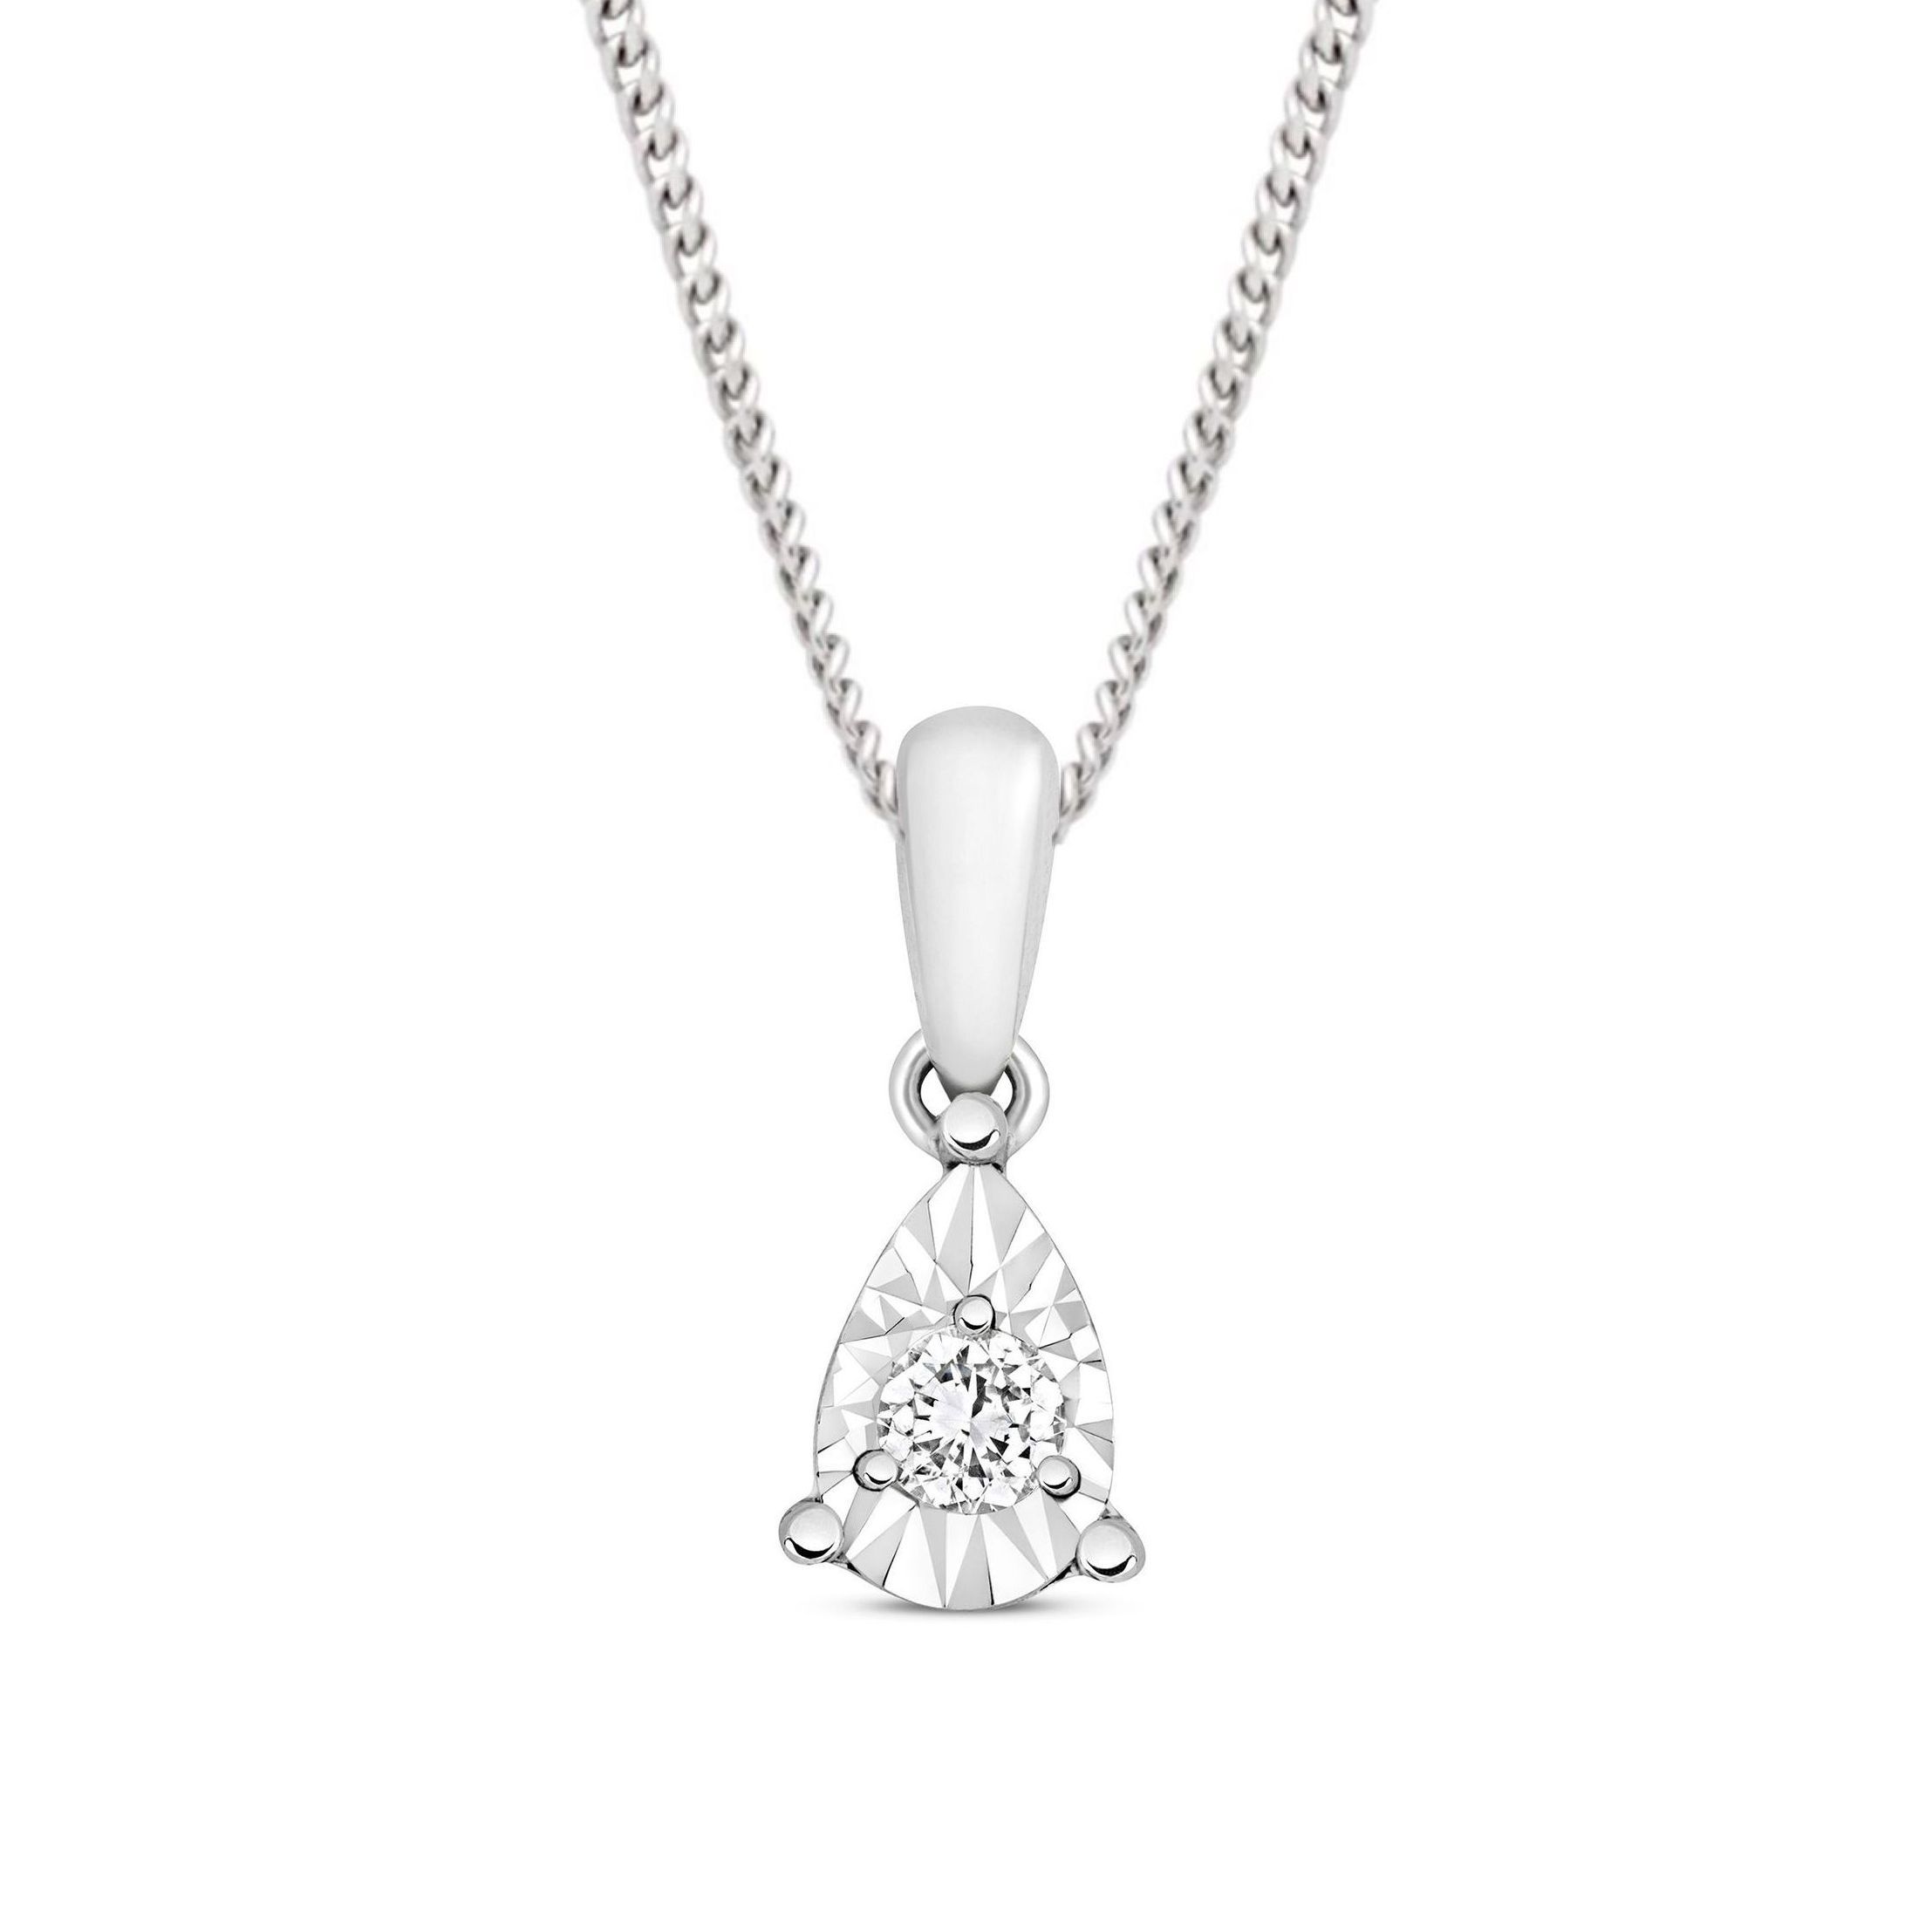 1/2 Look A Like Illusion Set Pear Shape Solitaire Diamond Pendant Necklace